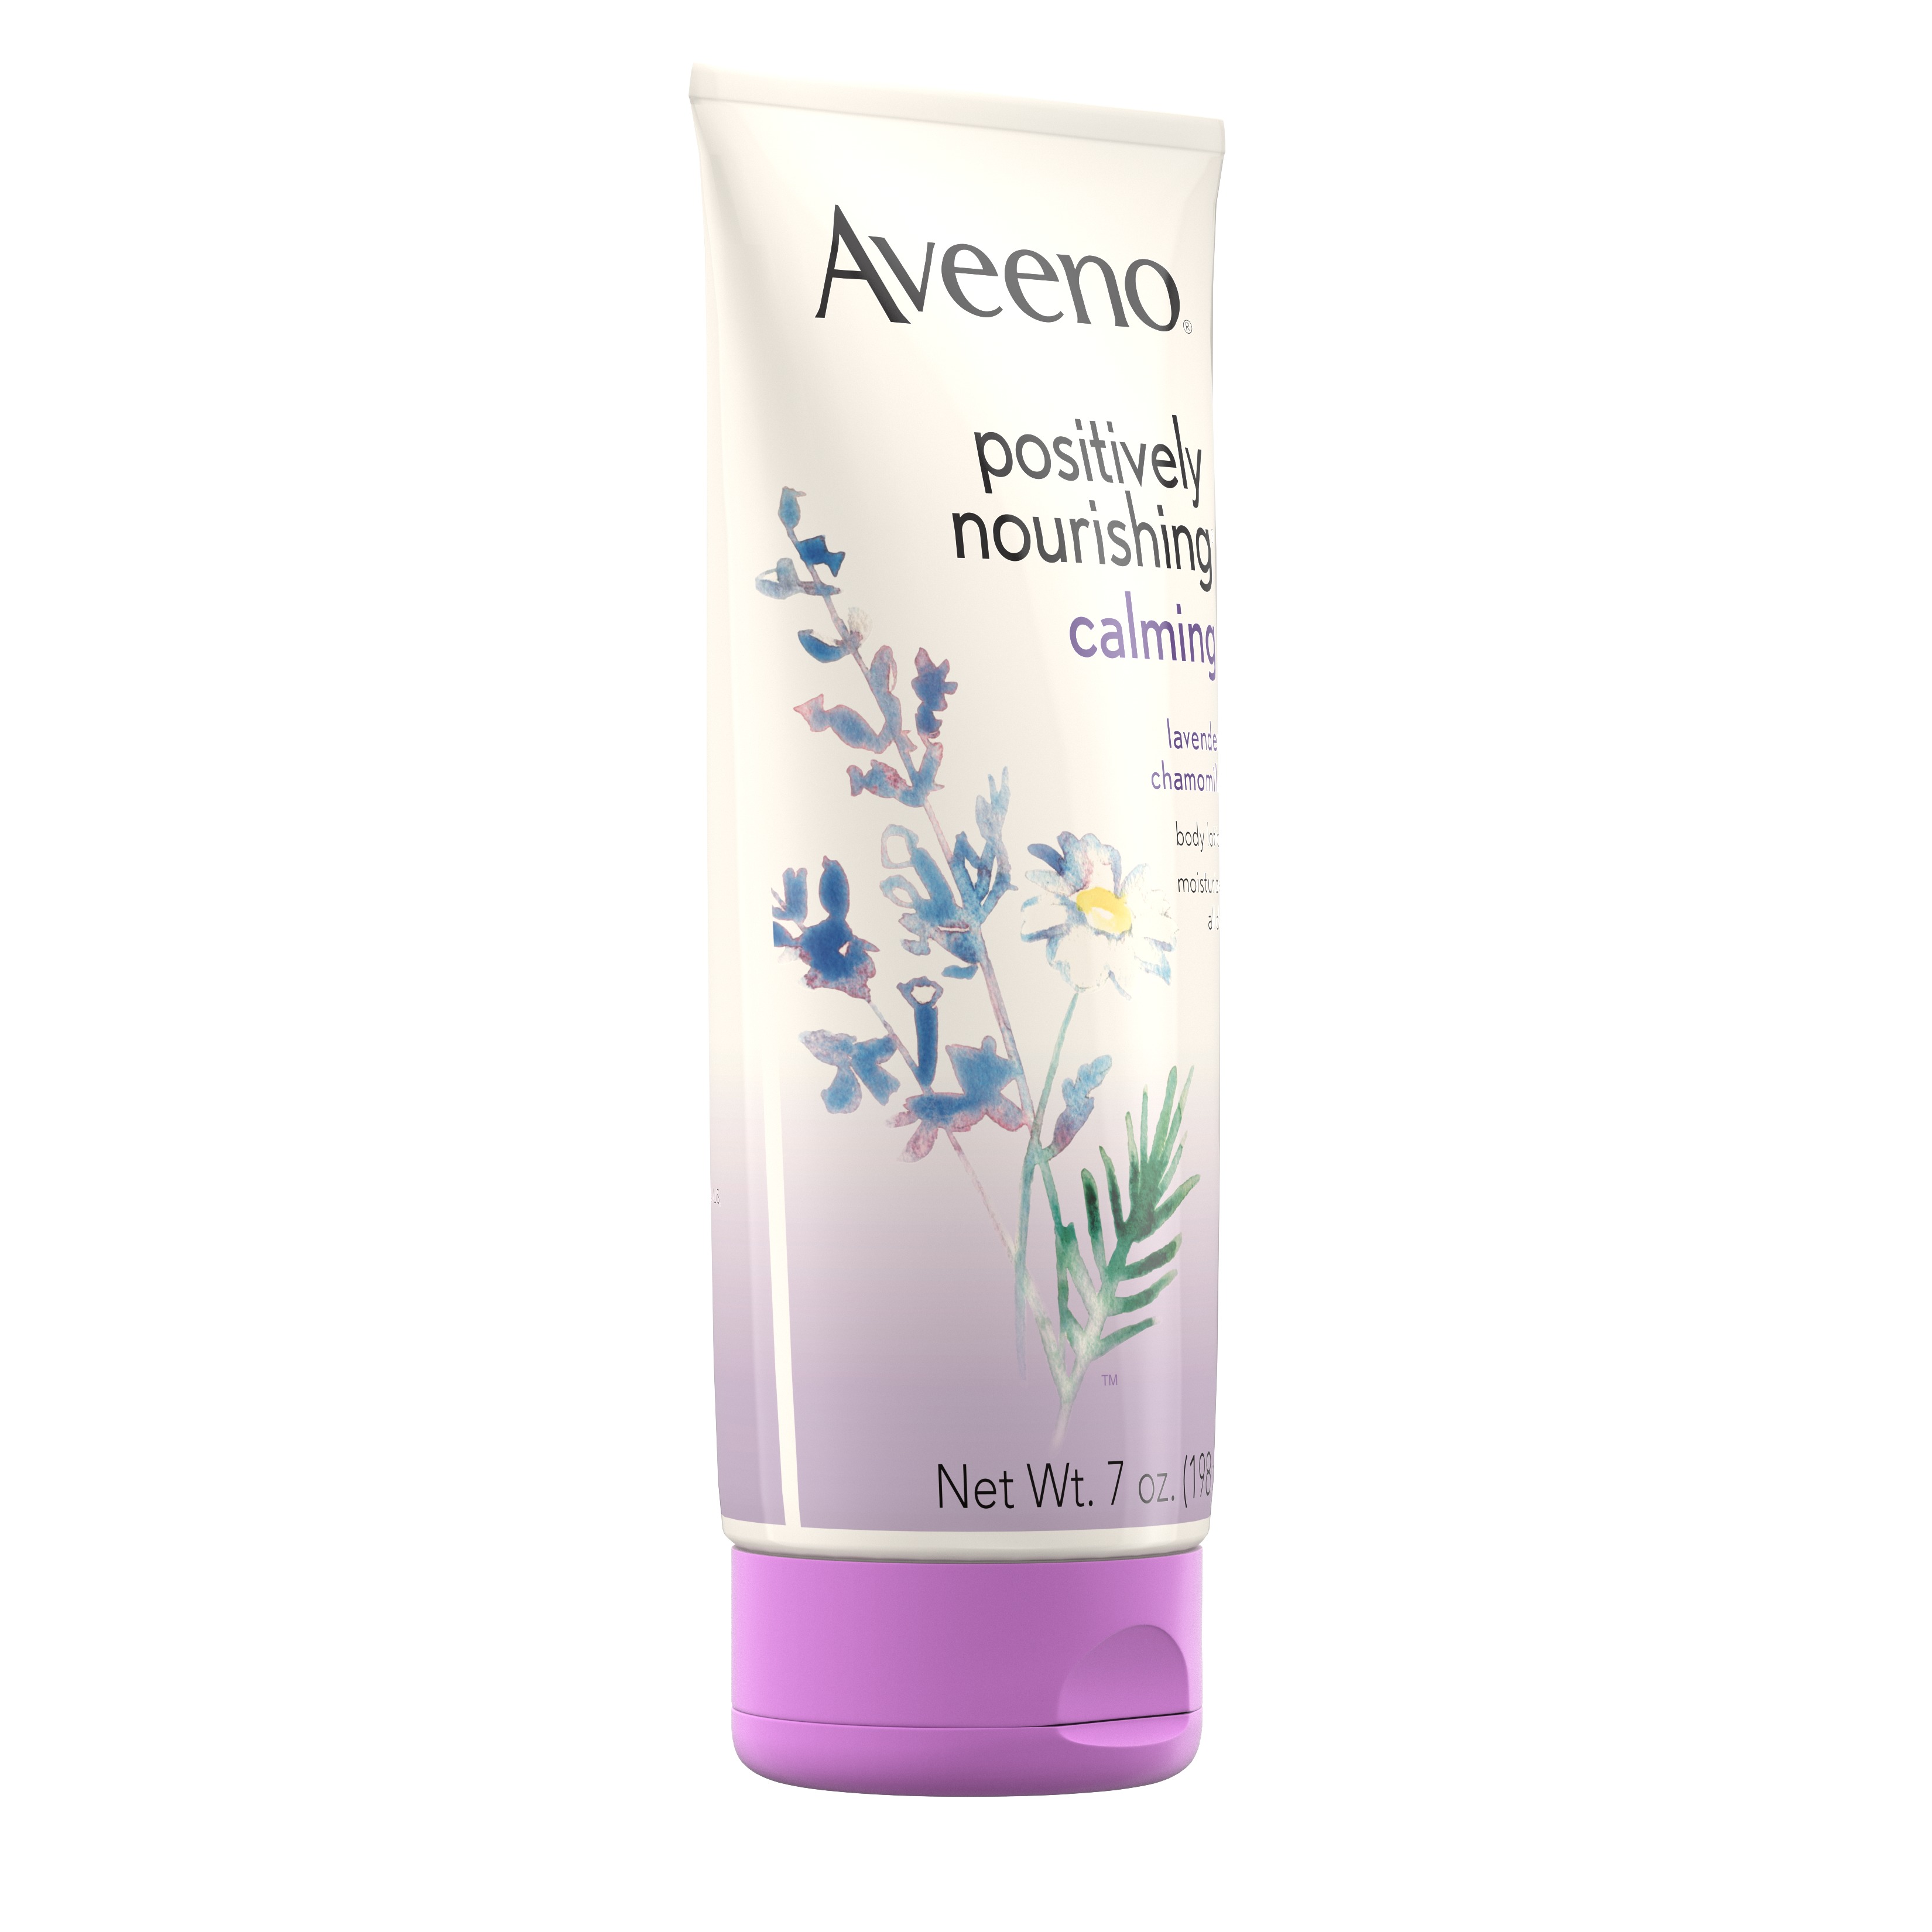 Aveeno Positively Nourishing Calming Lavender Body Lotion, 7 oz - image 3 of 8